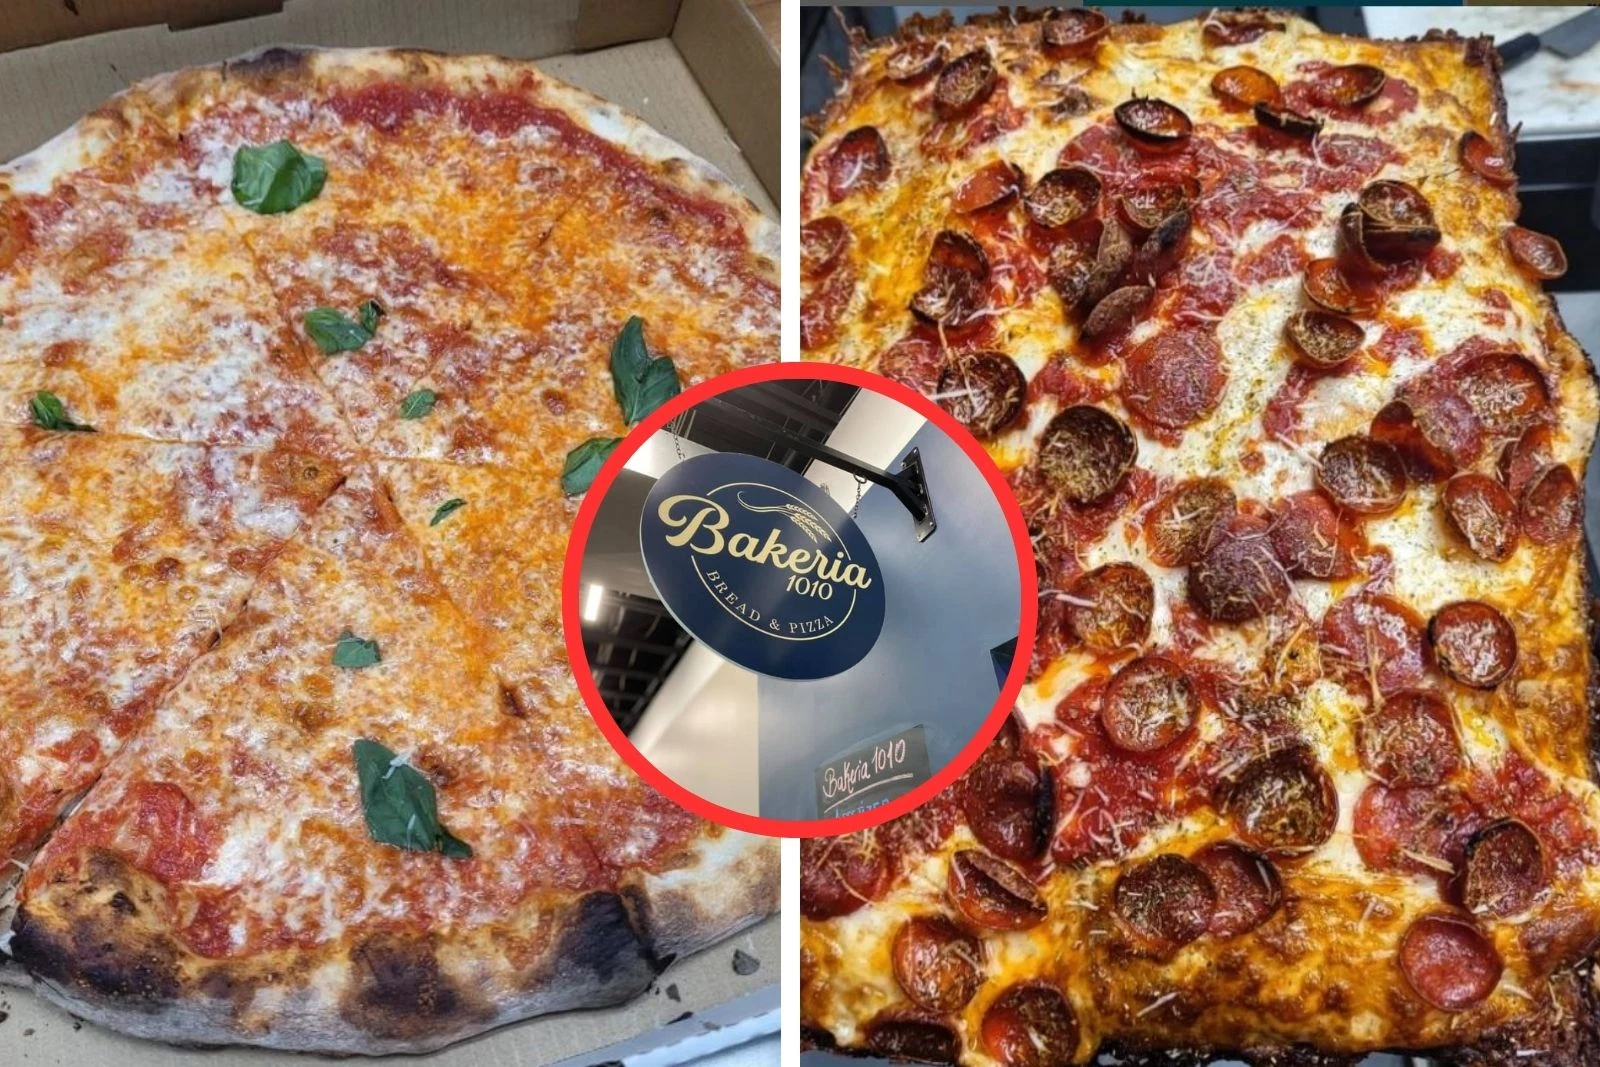 Former Linwood, NJ, Pizza Shop Bakeria 1010 set to Open in Ocean City,
NJ